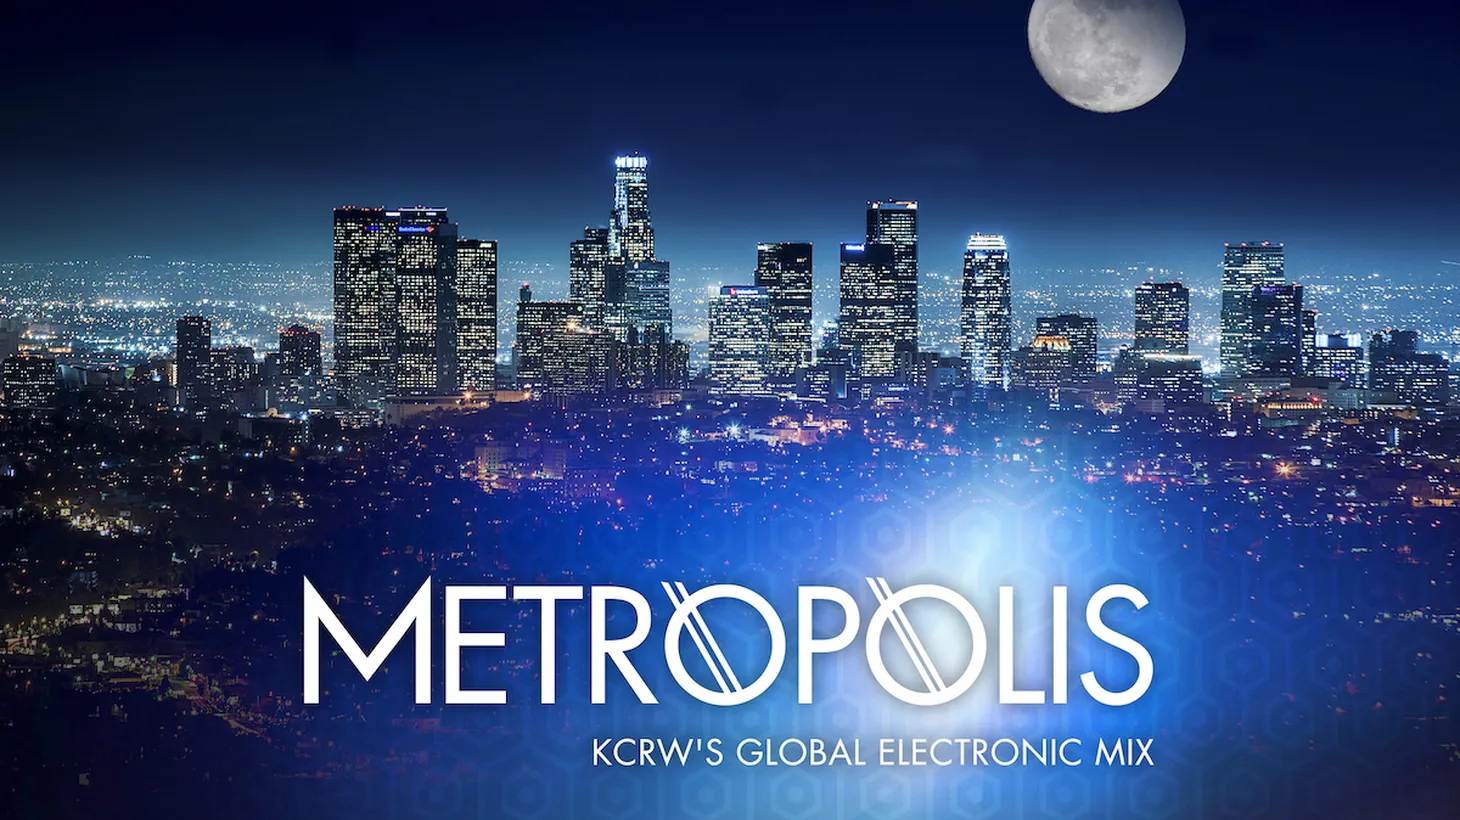 Metropolis playlist, December 26, 2020.